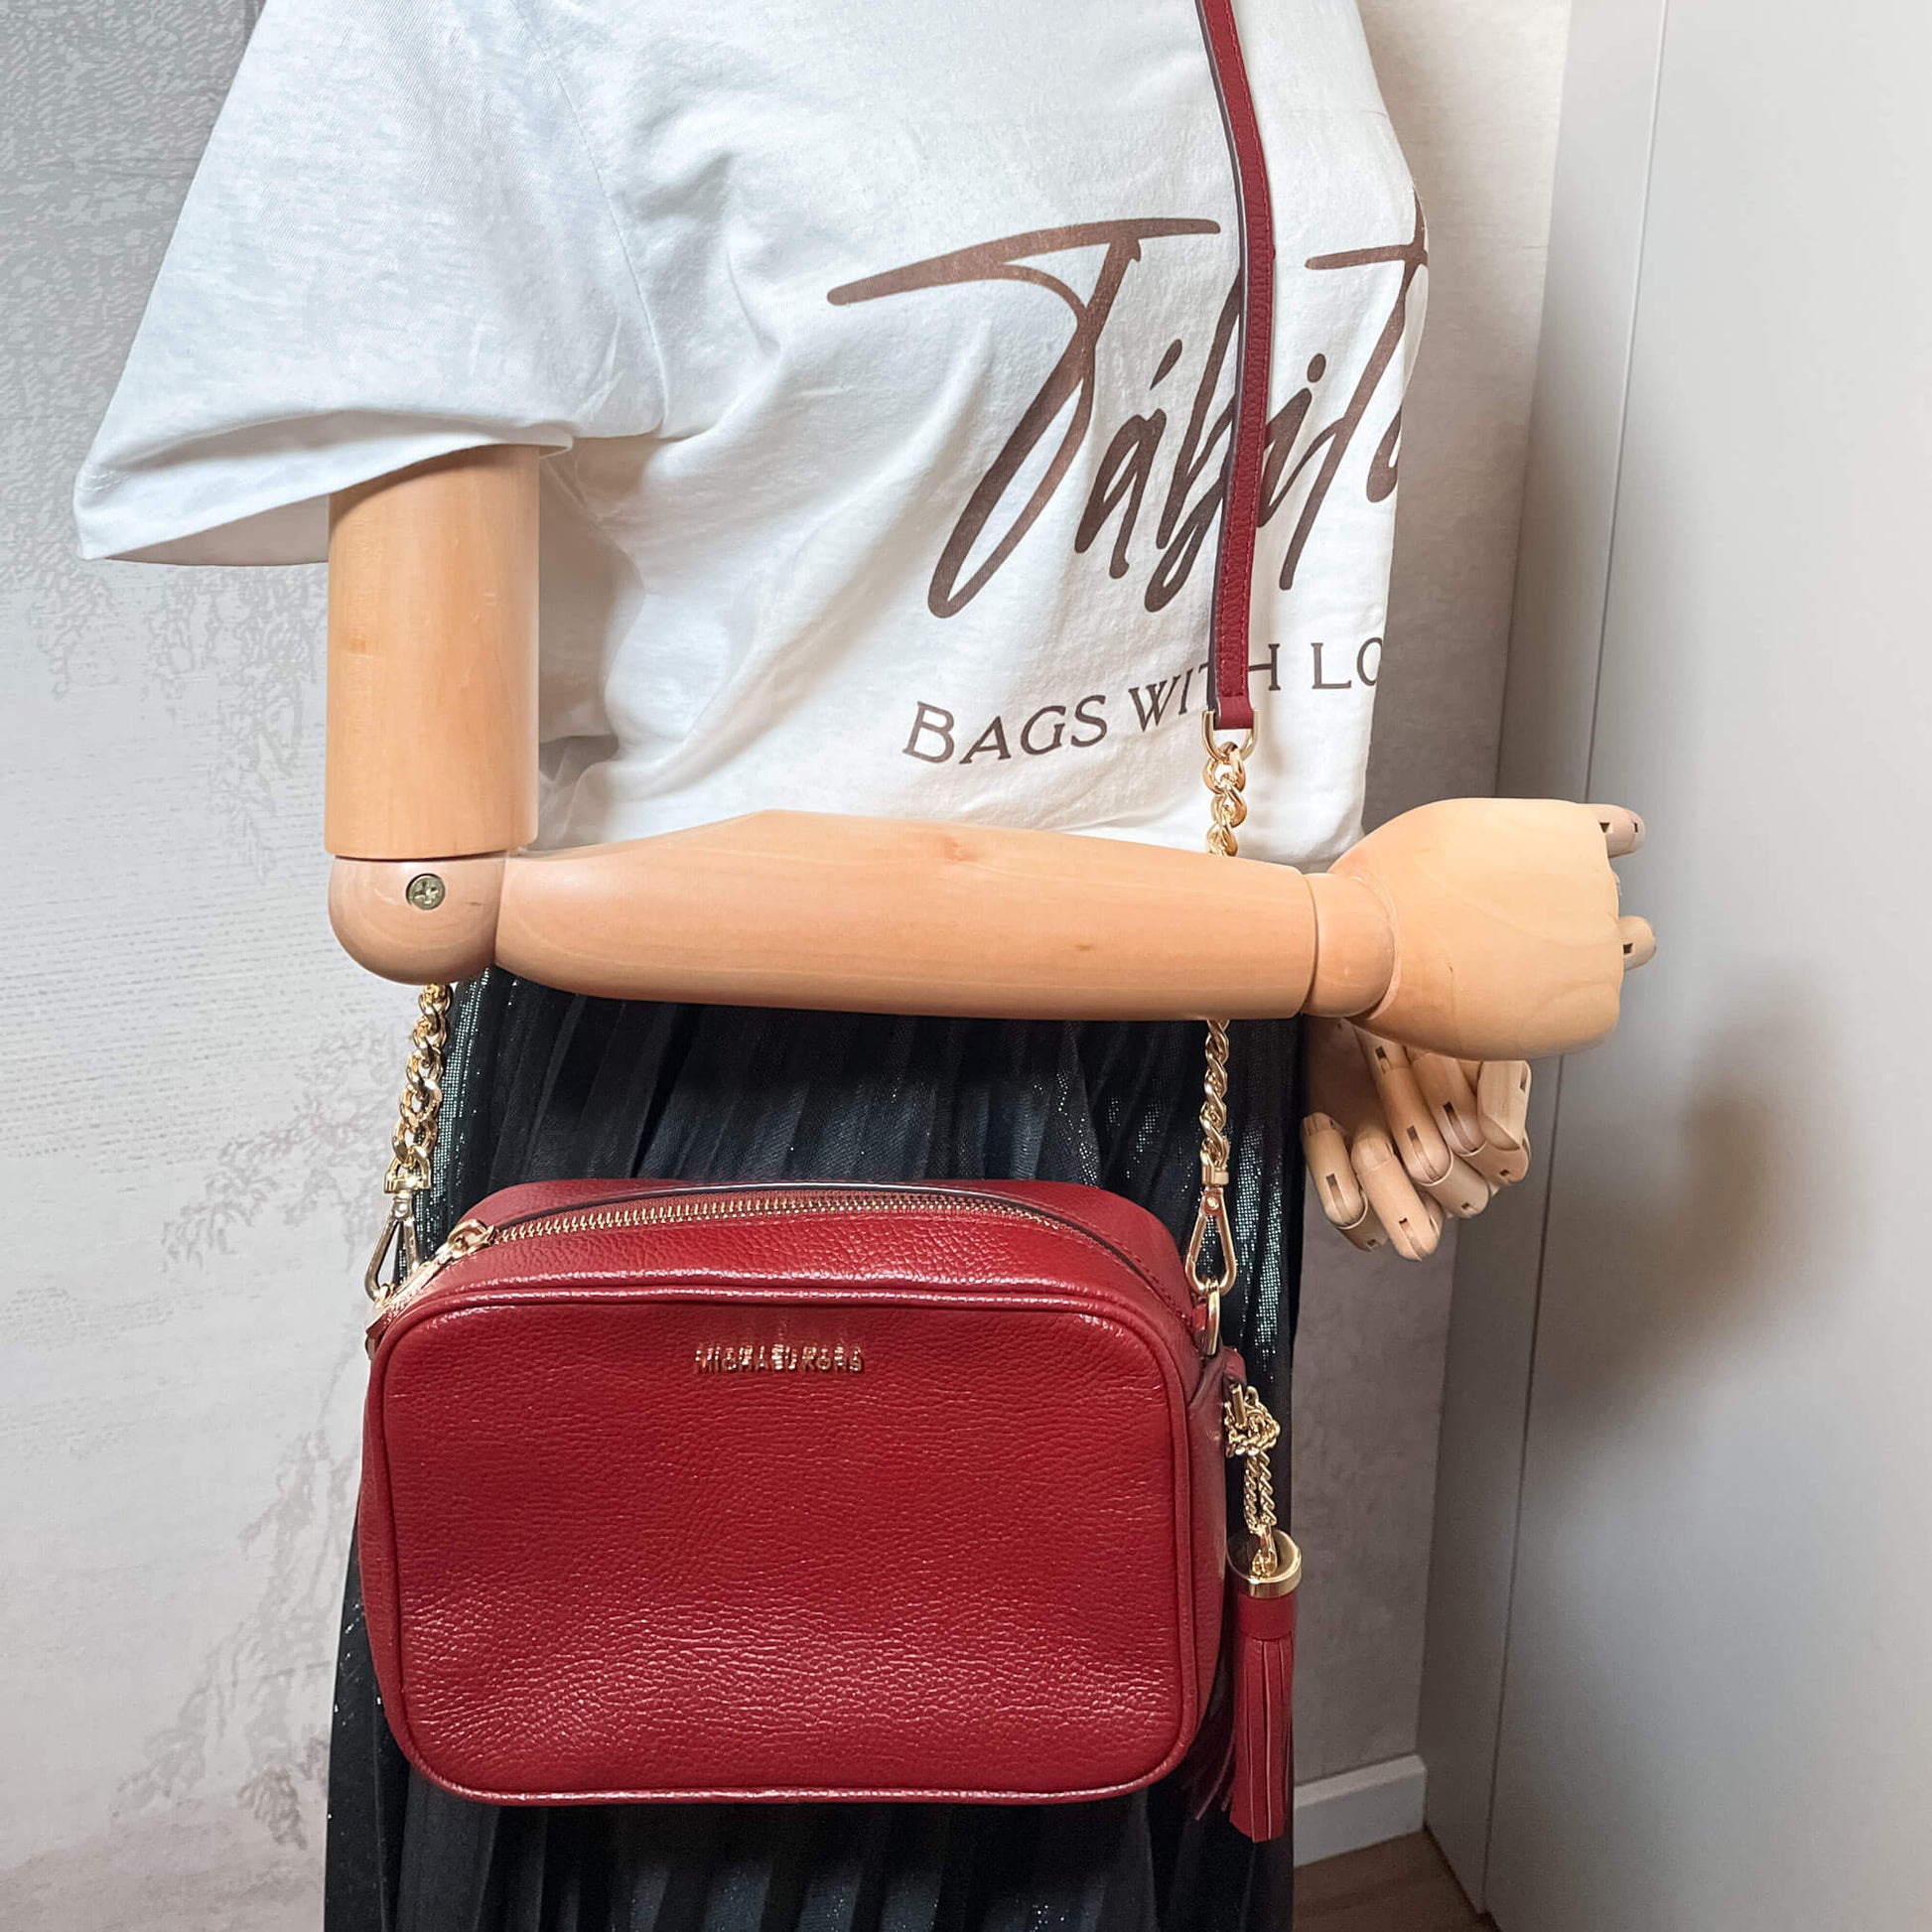 Second hand luxury bags - buy Pre-owned at Tabita Bags – Tabita